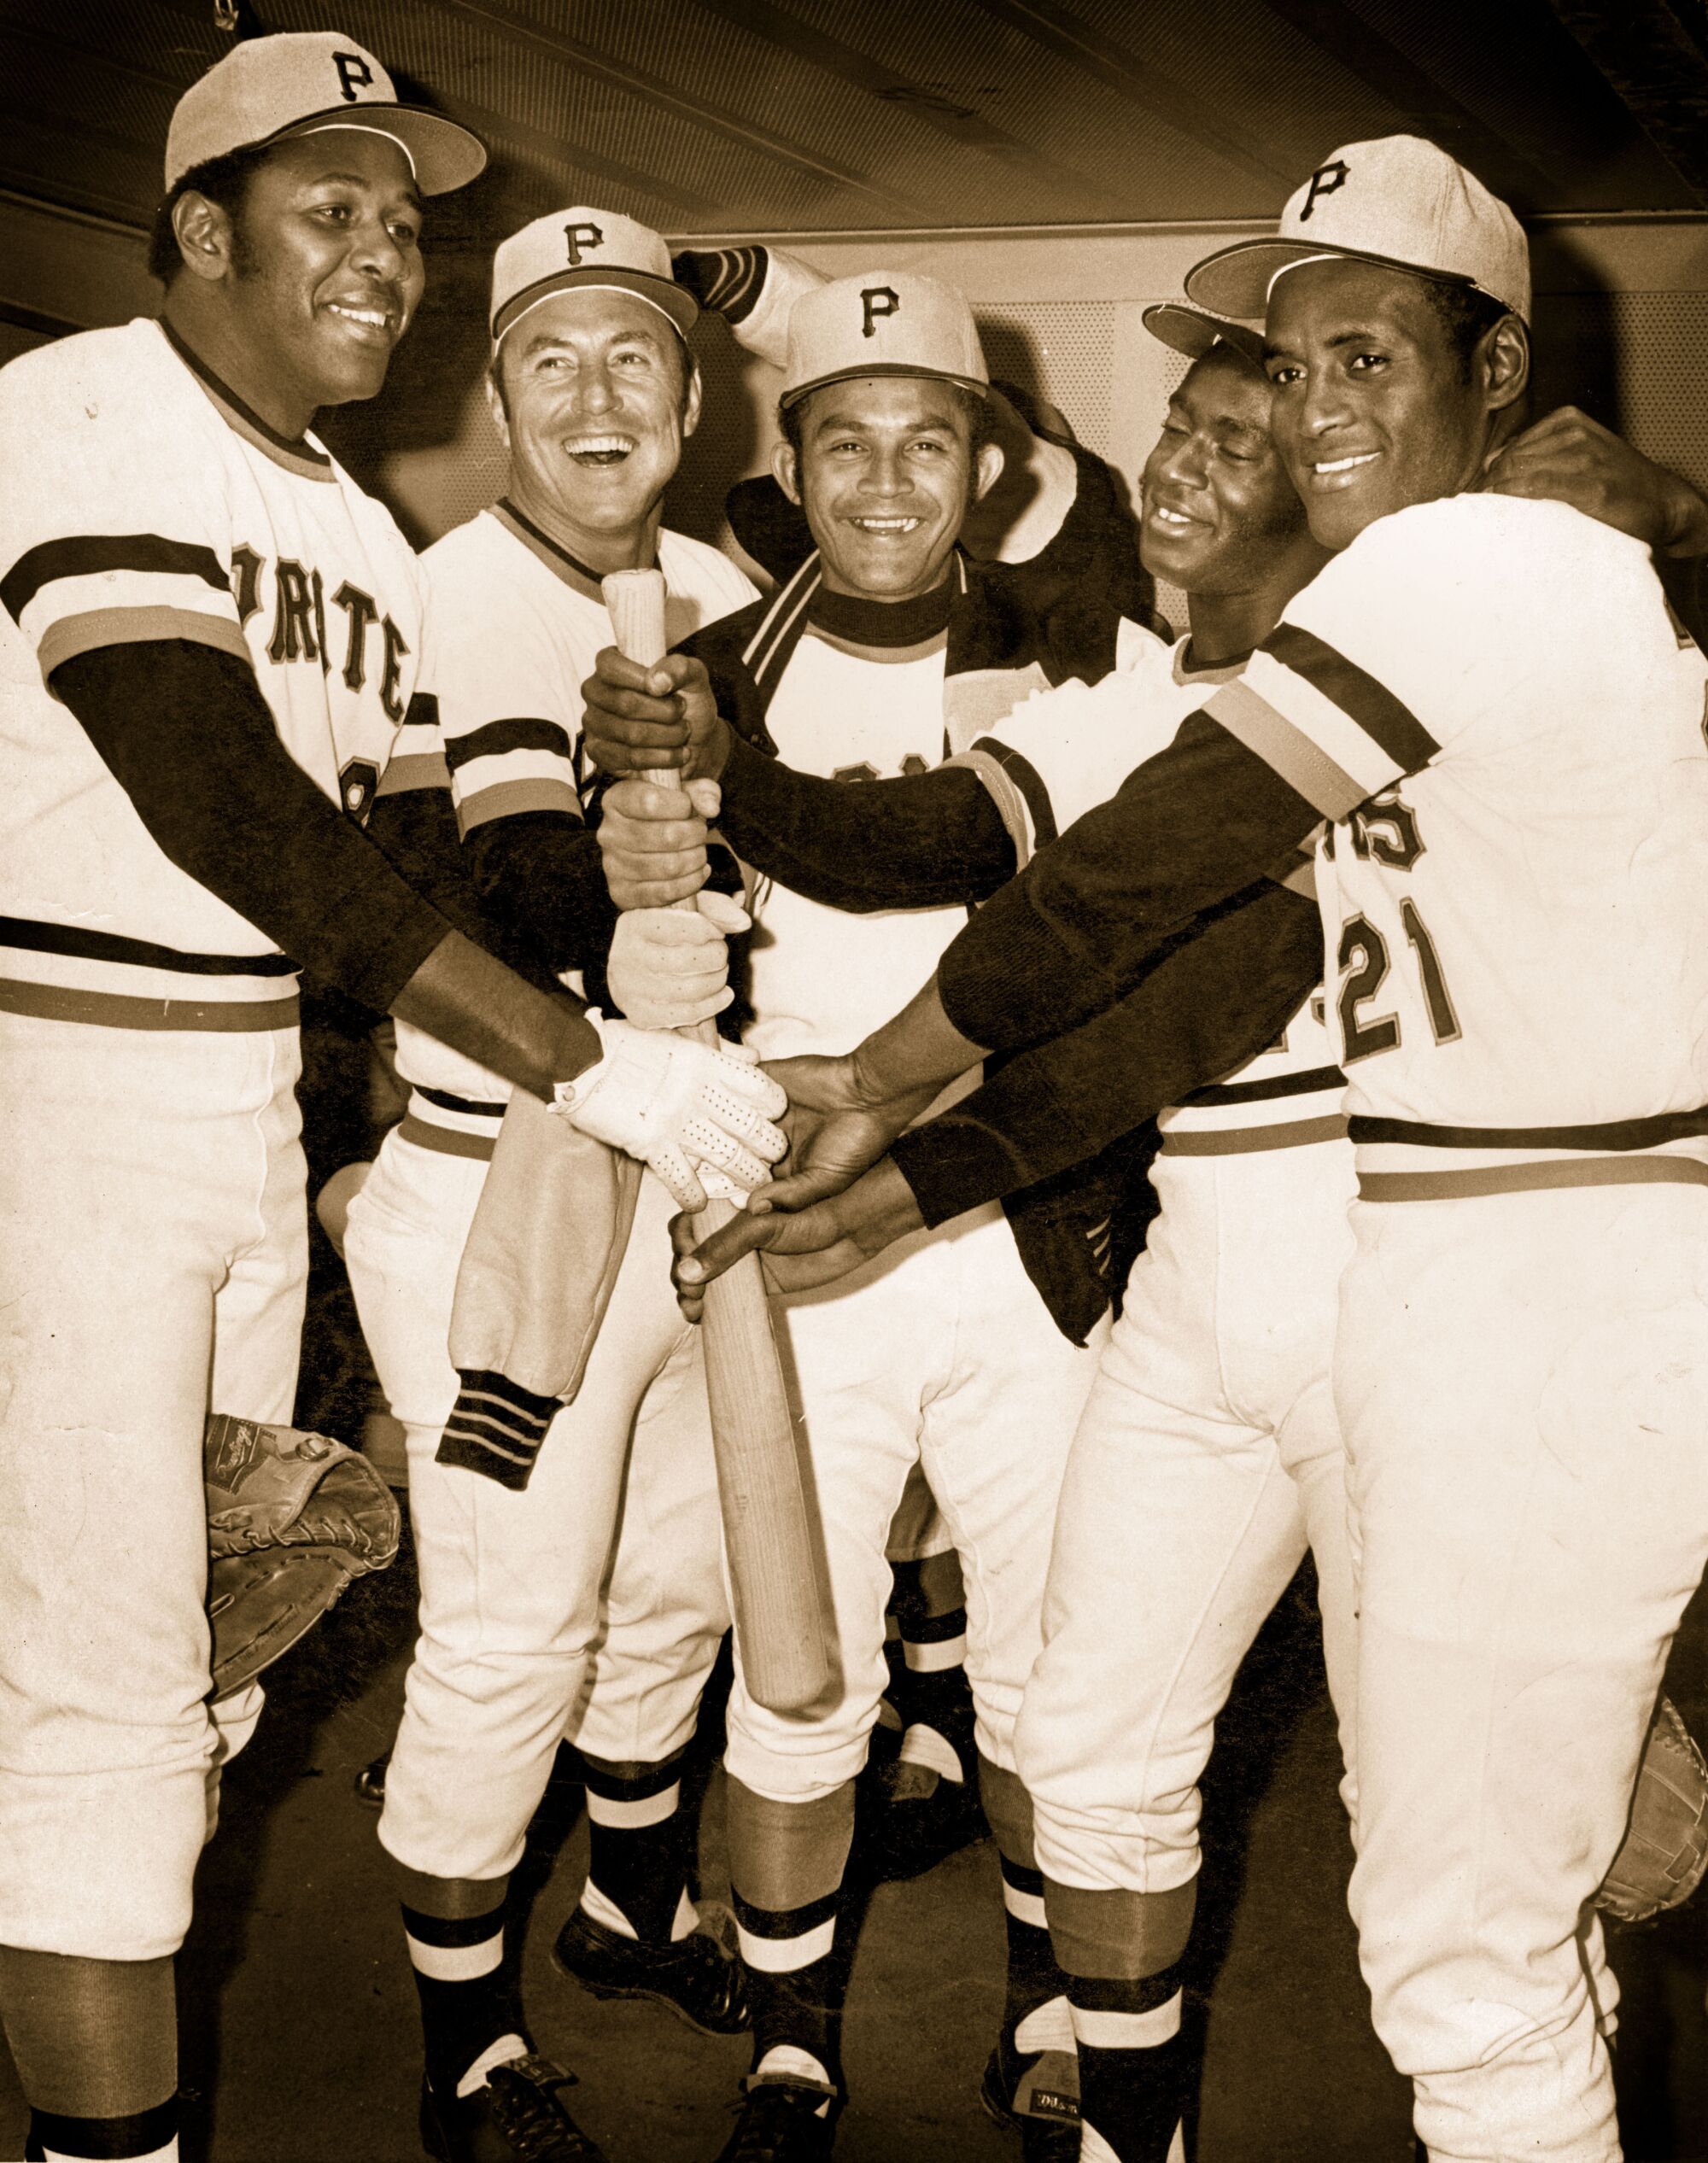 From left, Willie Stargell, Bill Mazeroski, Vic Davalillo, Gene Clines and Roberto Clemente